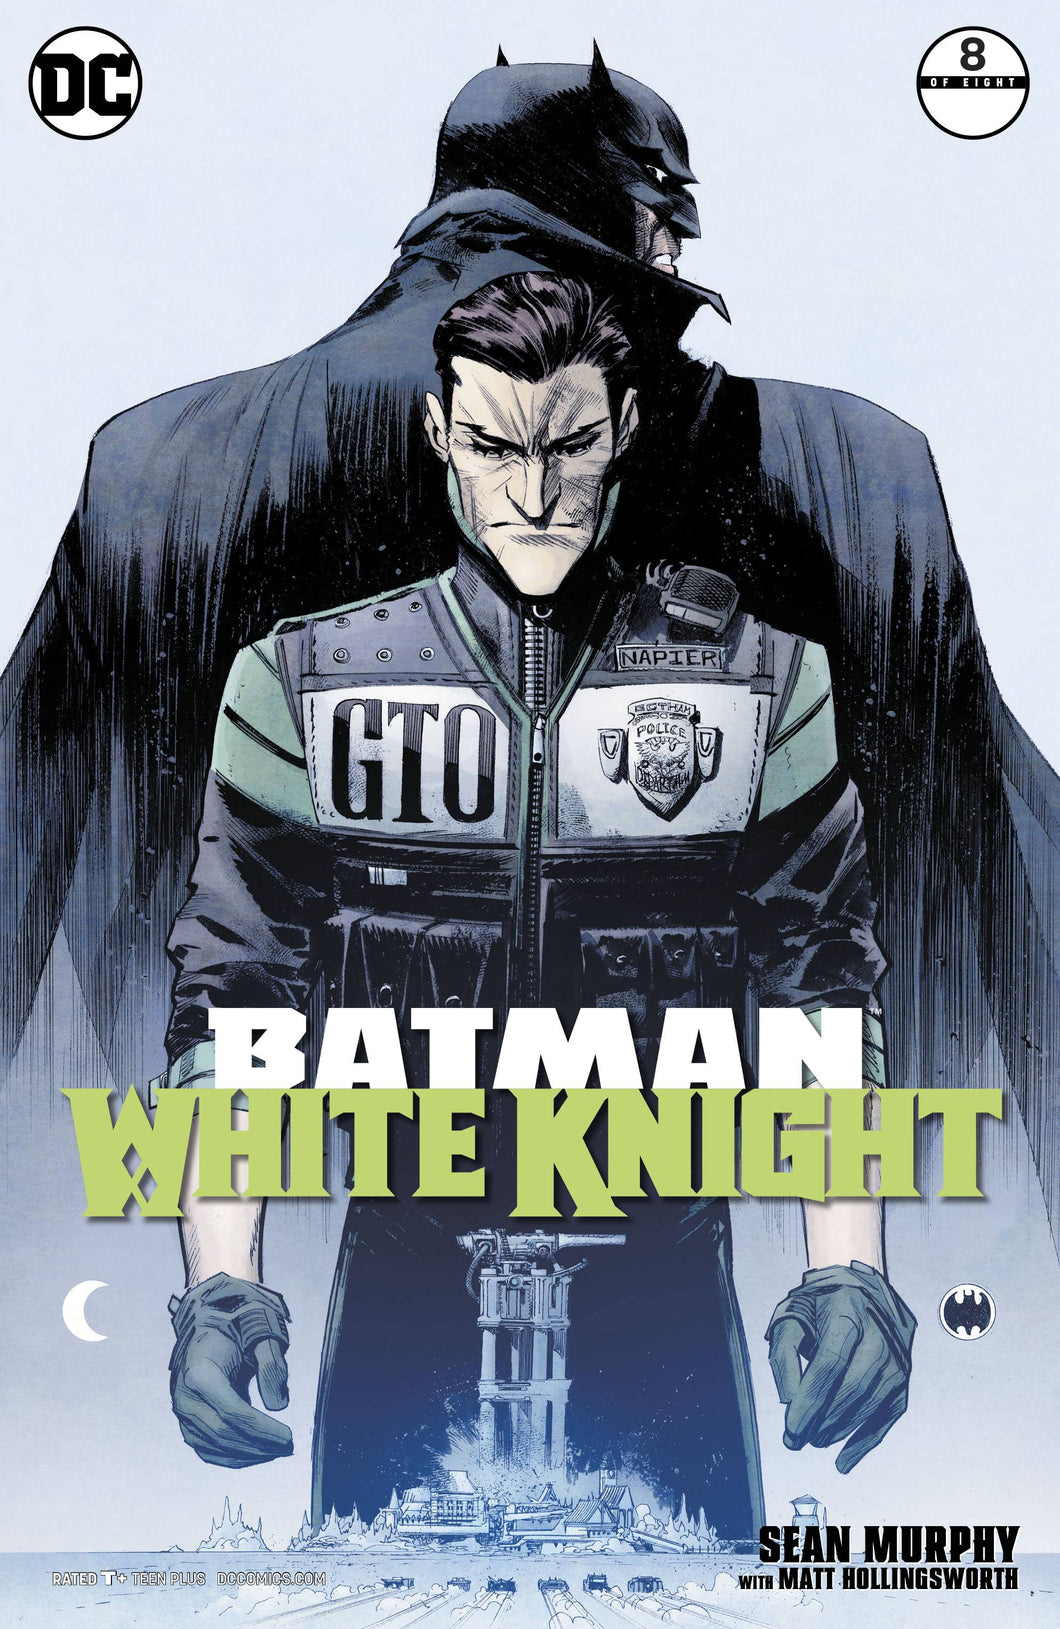 BATMAN WHITE KNIGHT #8 (OF 8)